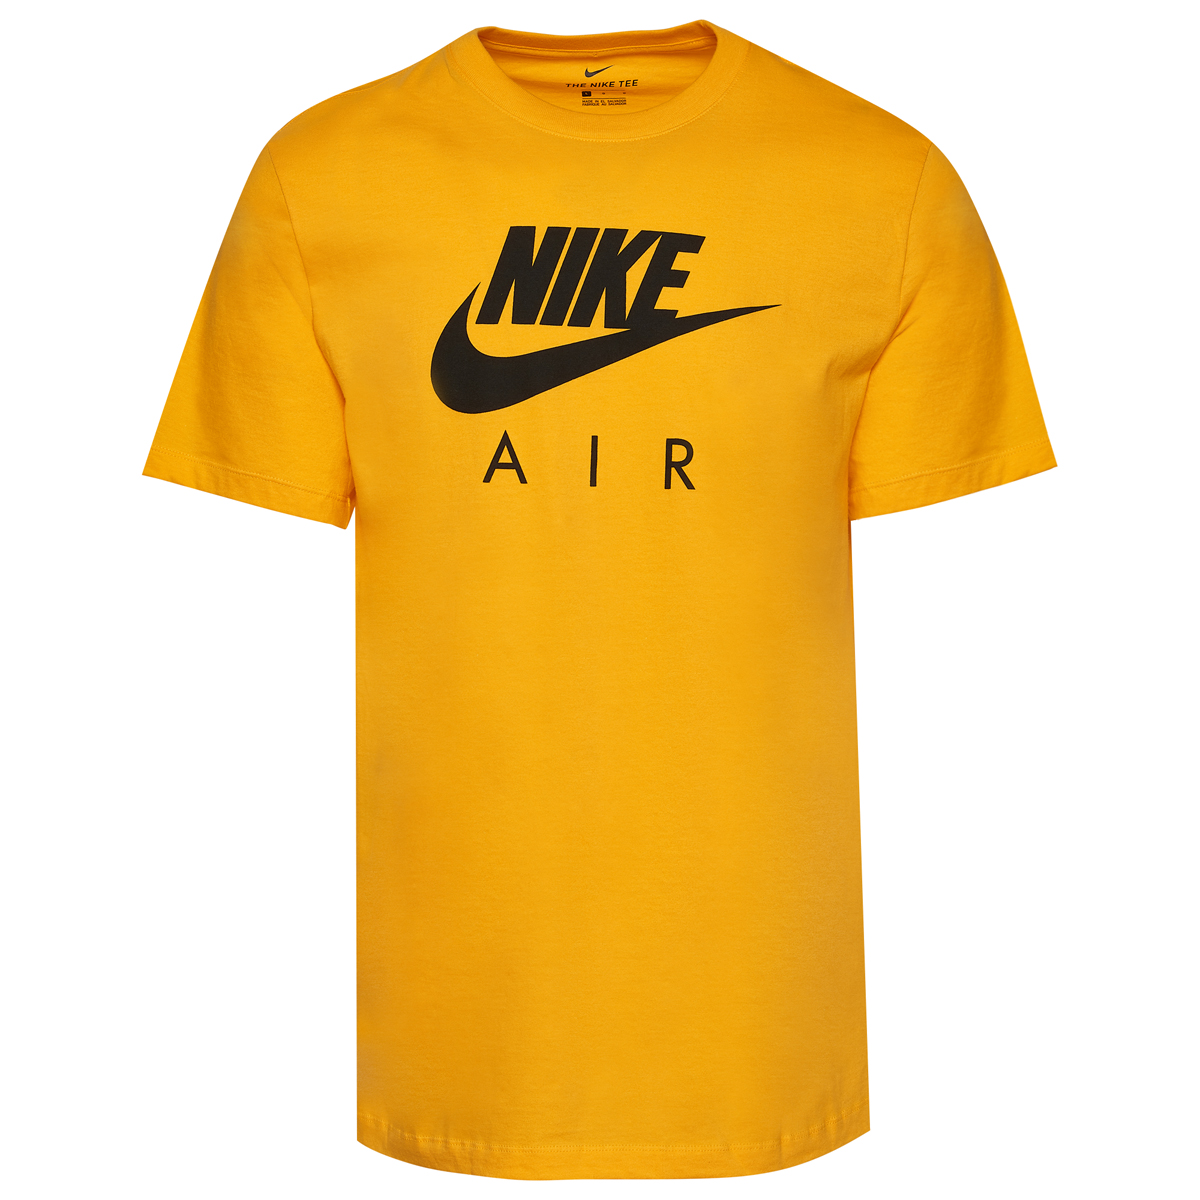 Nike-Air-Futura-T-Shirt-Yellow-Gold-Black